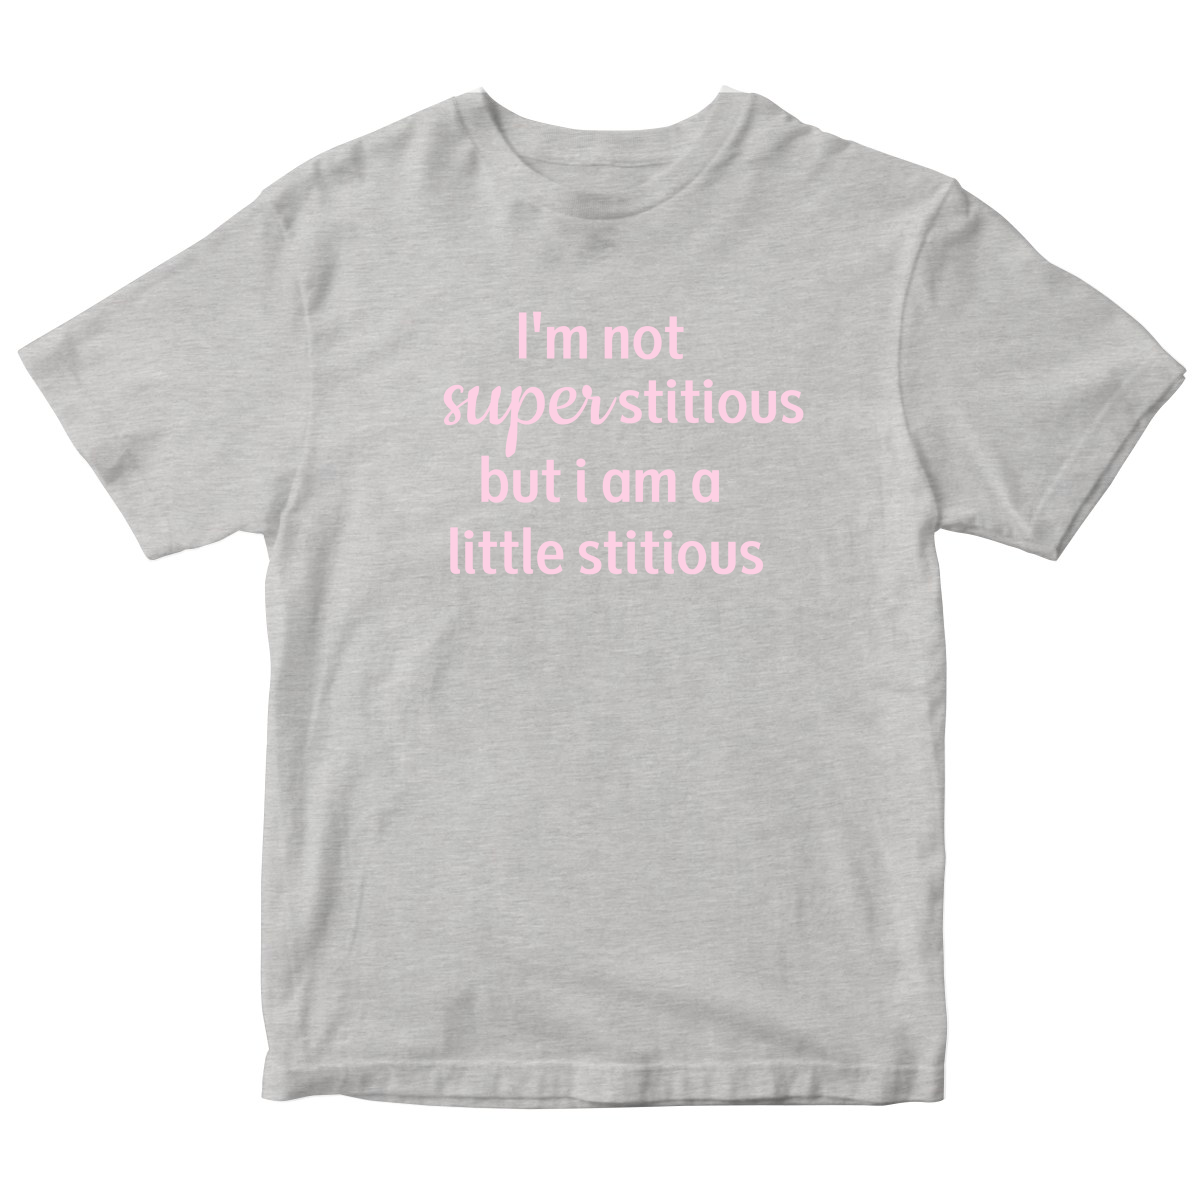 I'm Not Superstitious but I am a Little Stitious Kids T-shirt | Gray